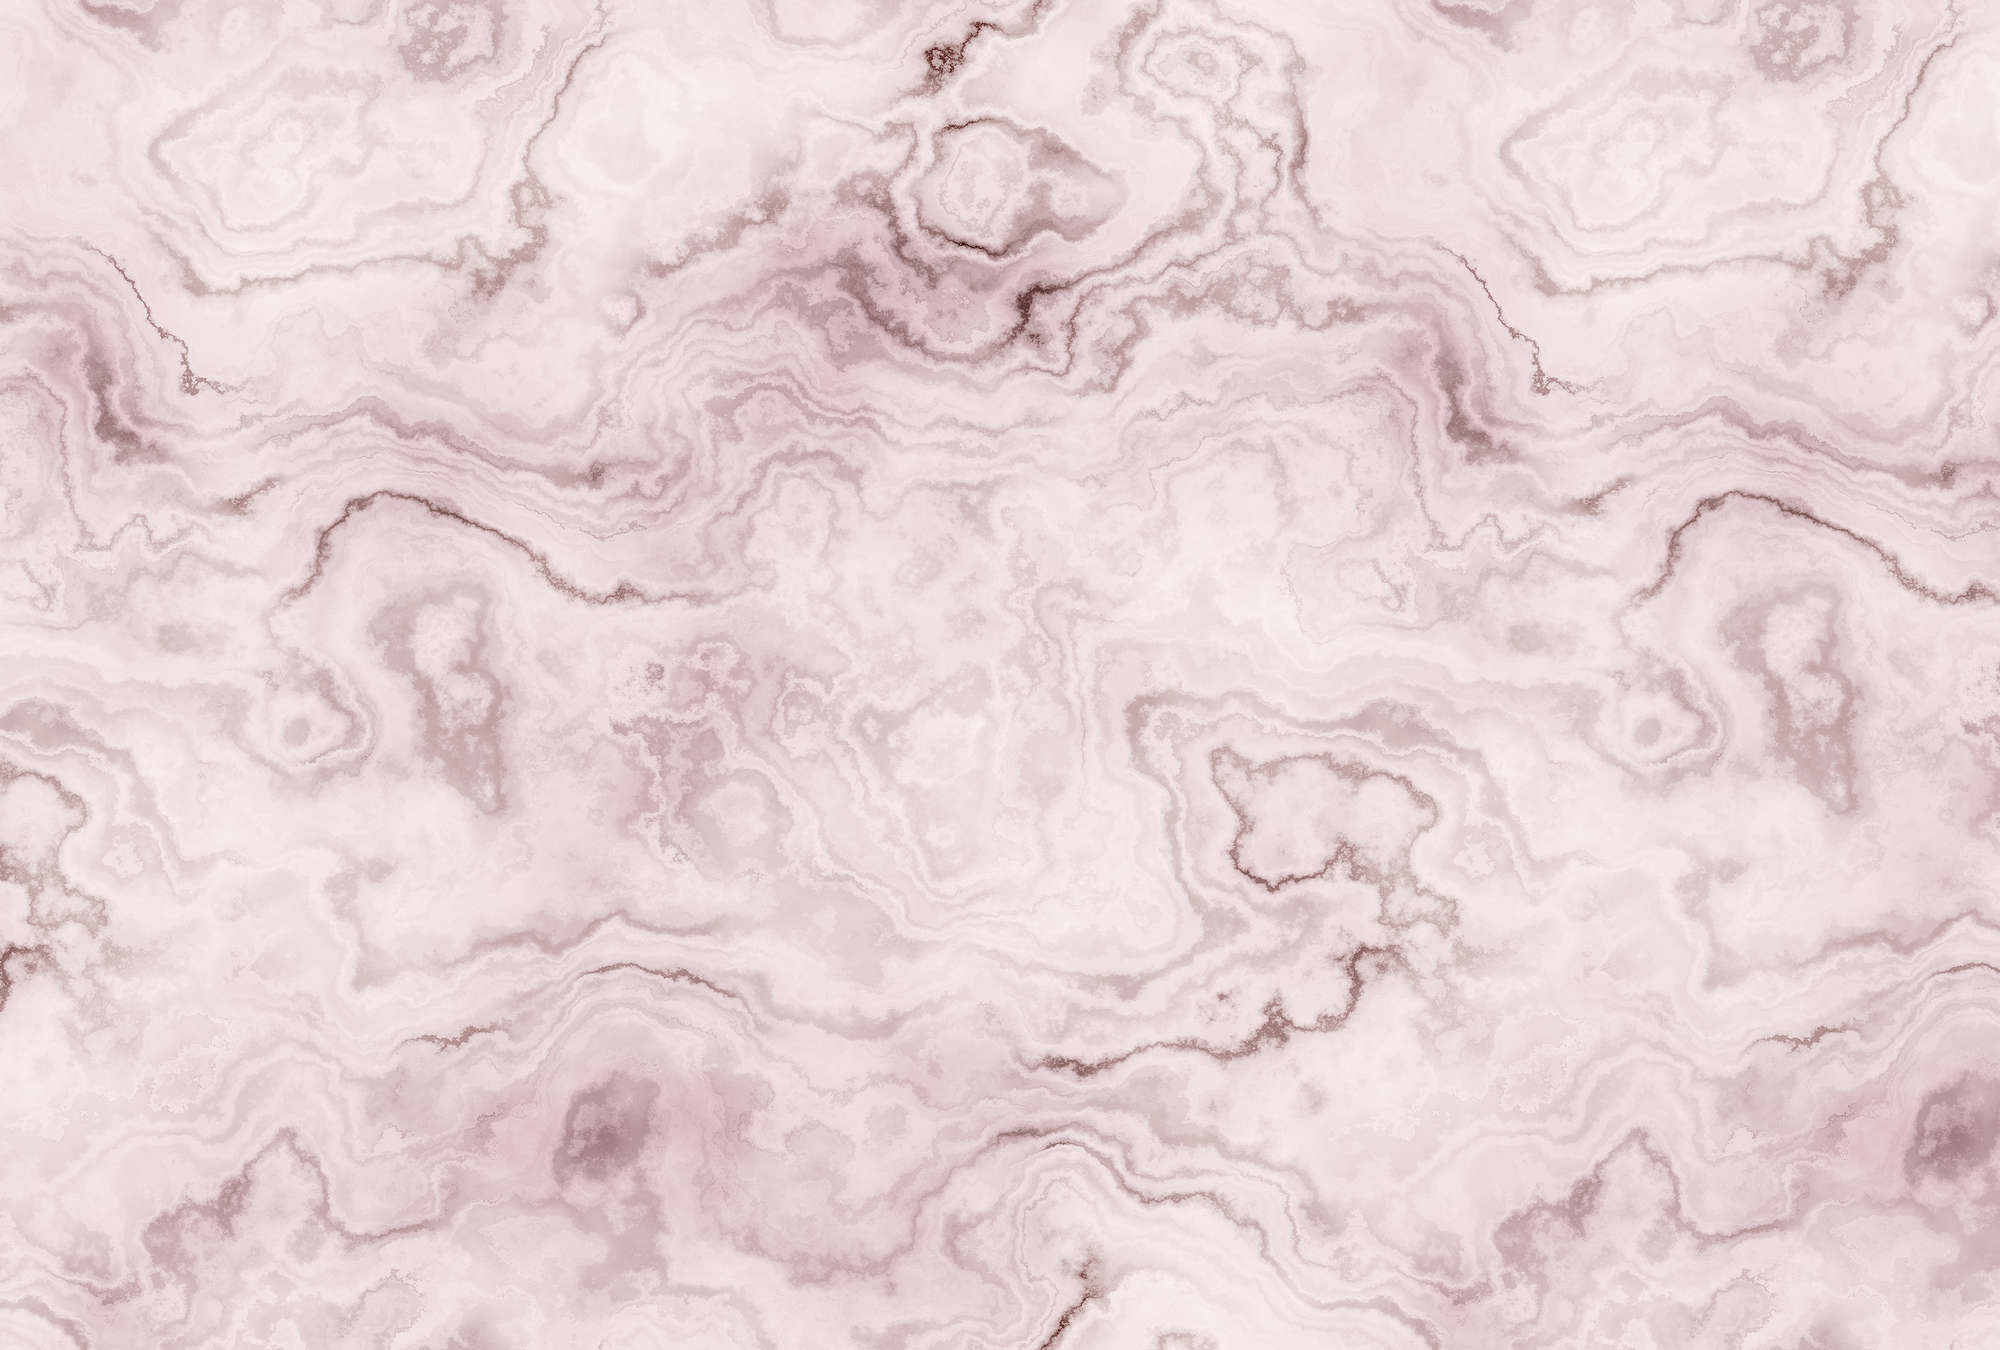             Carrara 3 - Elegant marble-look wallpaper - pink, red | mother-of-pearl smooth fleece
        